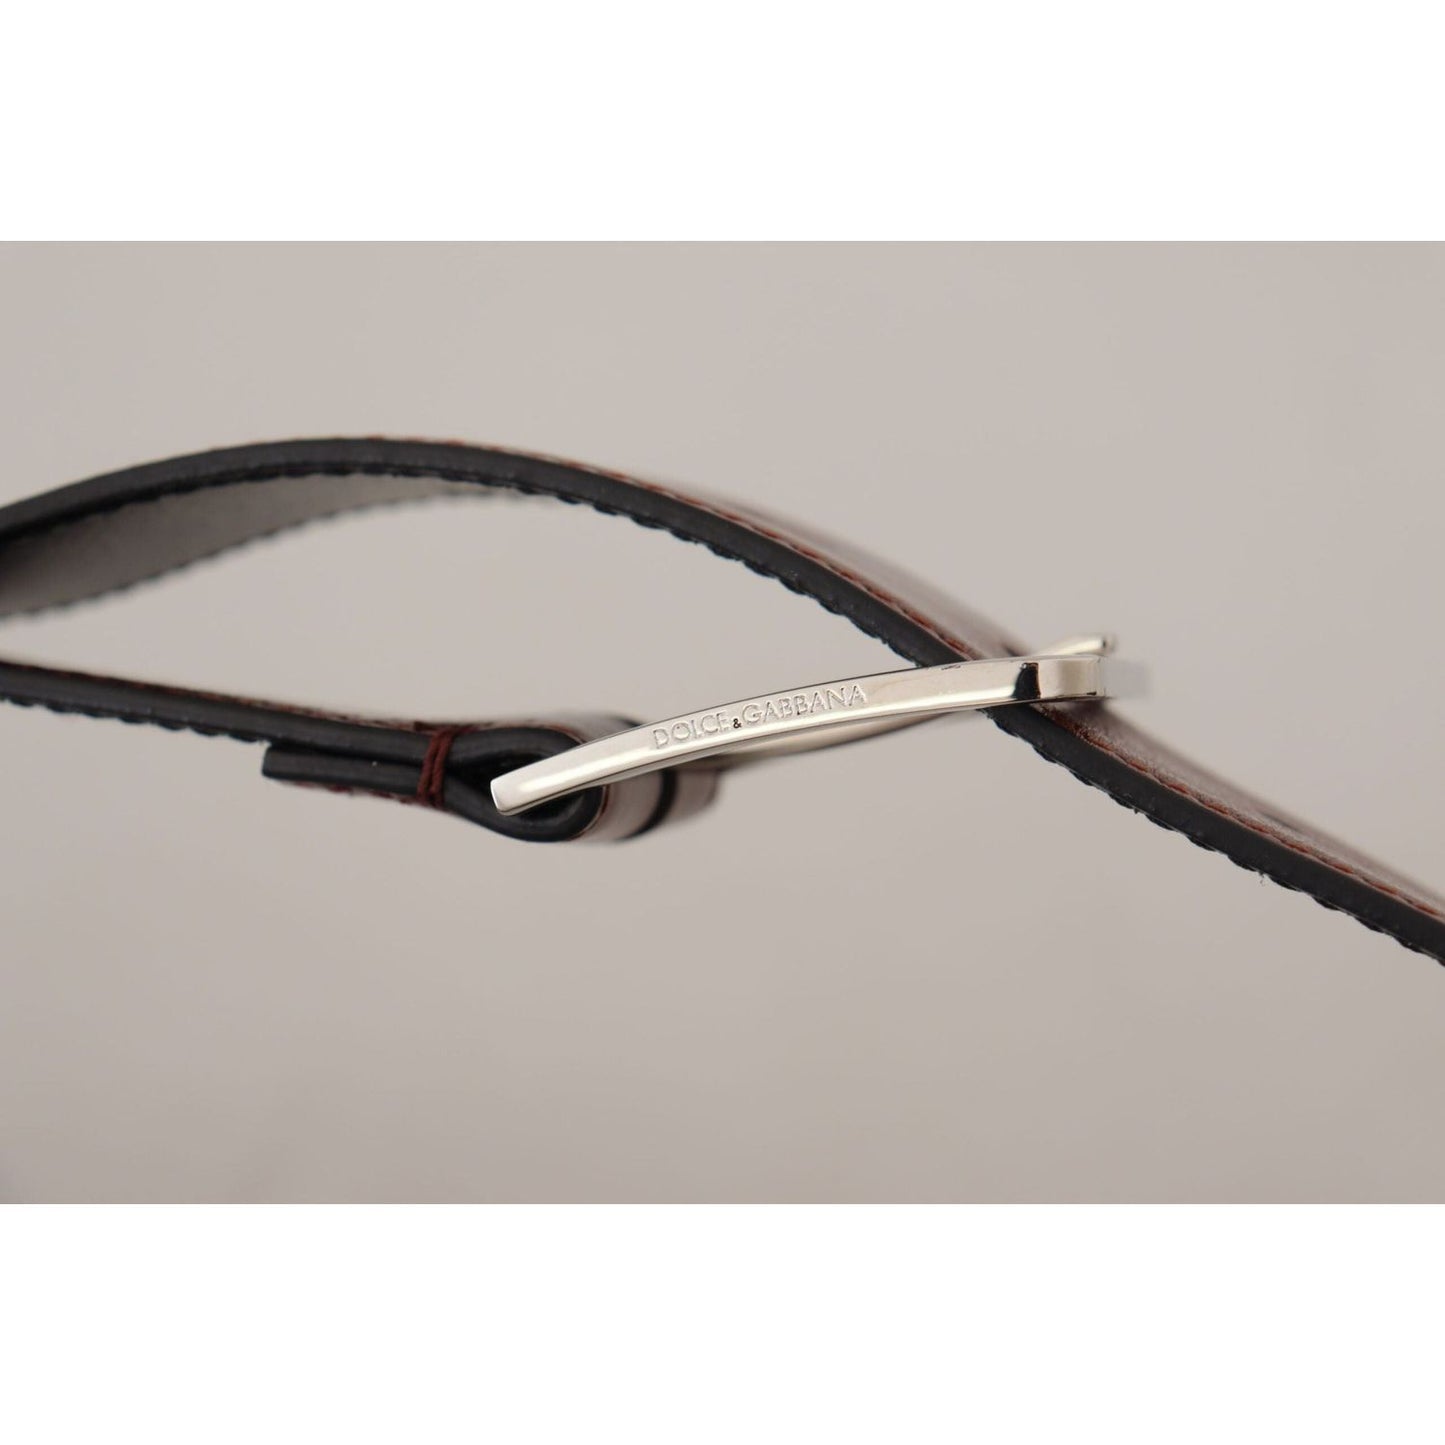 Dolce & Gabbana Elegant Leather Belt with Engraved Buckle bordeaux-calf-patent-leather-logo-waist-buckle-belt IMG_8765-scaled-f63c3719-2b3.jpg